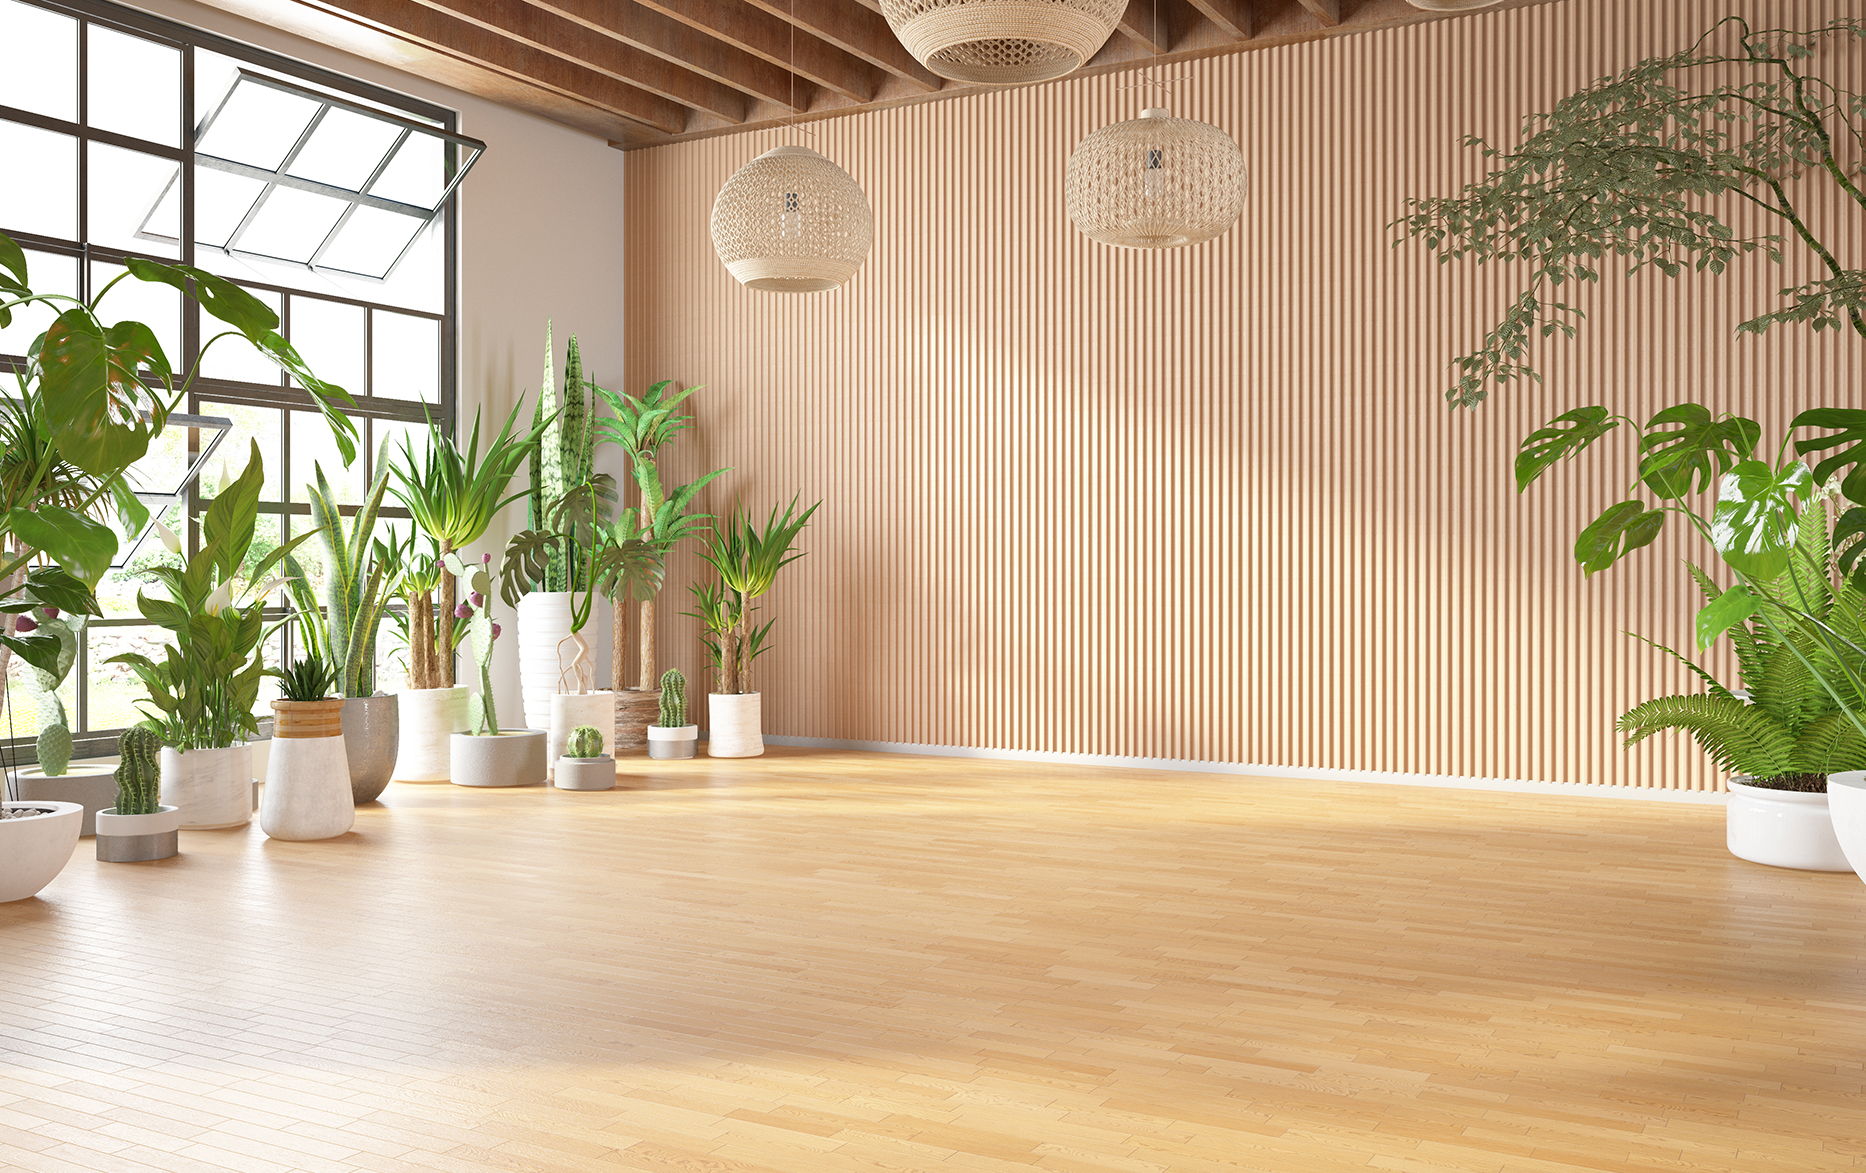 floors bamboo